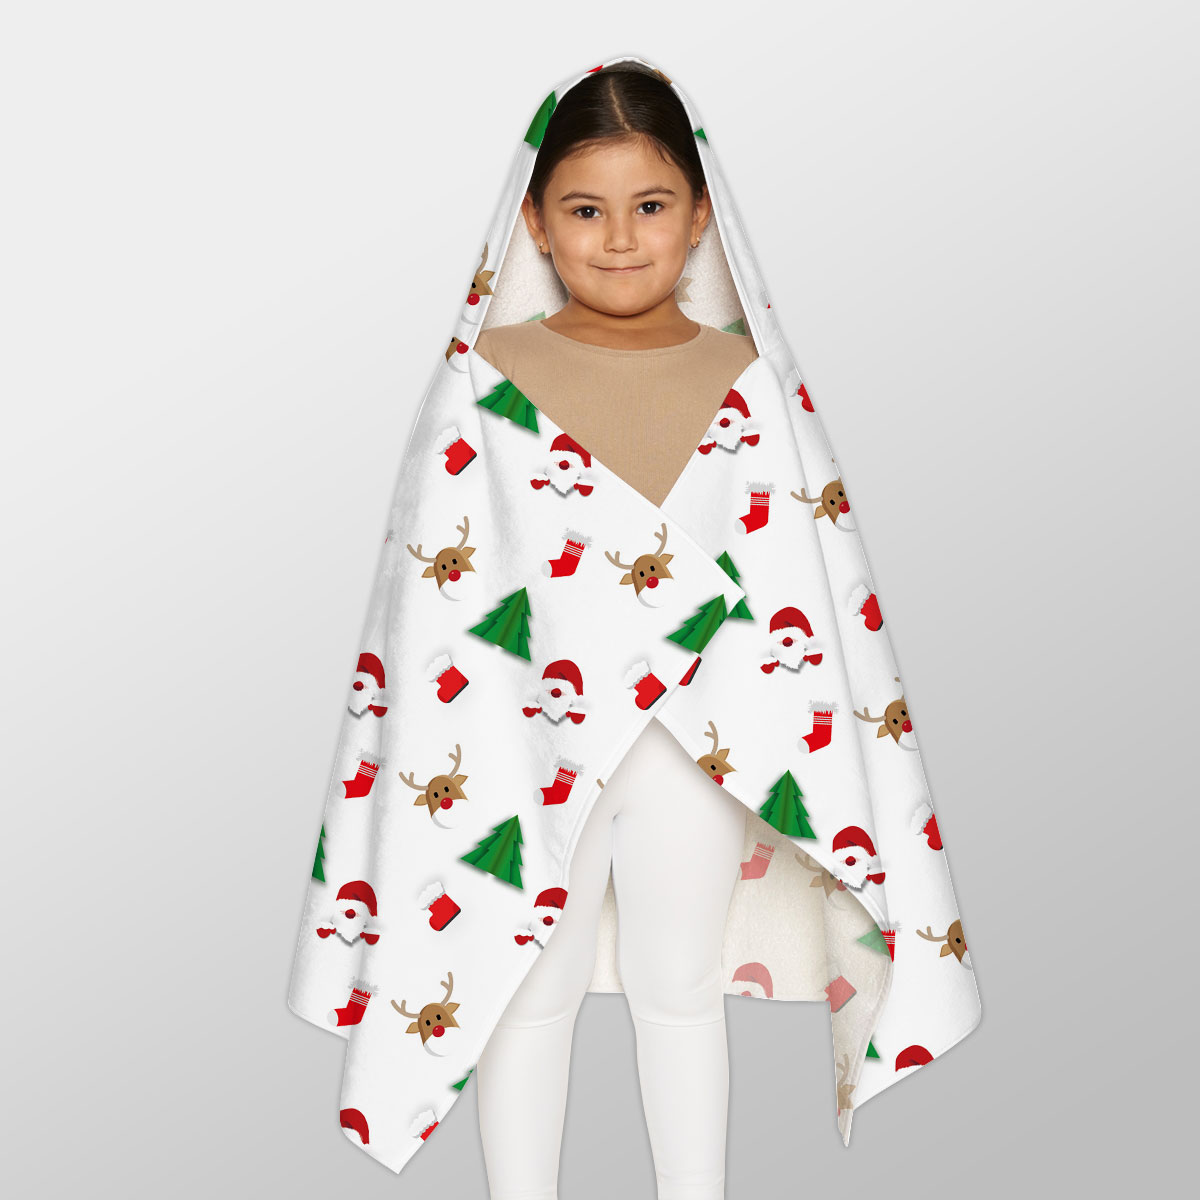 Santa Claus, Pine Tree Silhouette, Christmas Reindeer And Red Socks Seamless Pattern Youth Hooded Towel